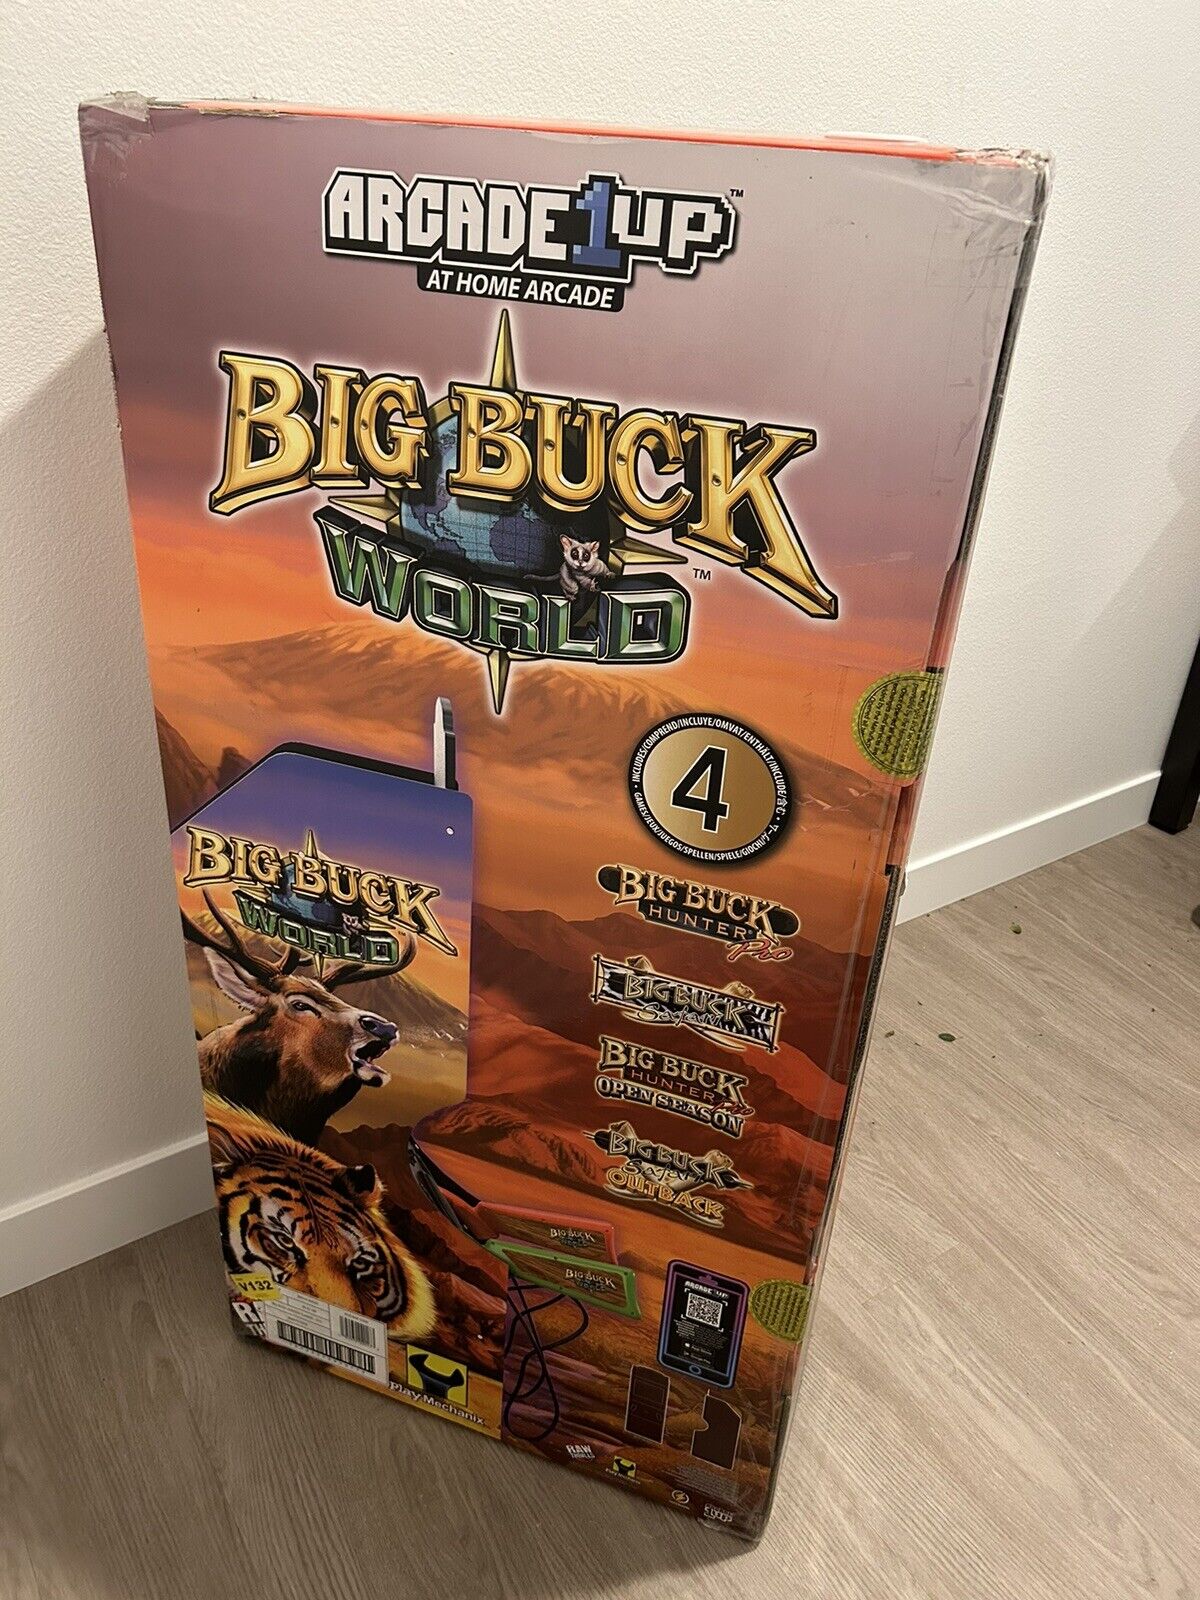 Arcade1up Big Buck World Video Arcade Machine - BBH-A-304029